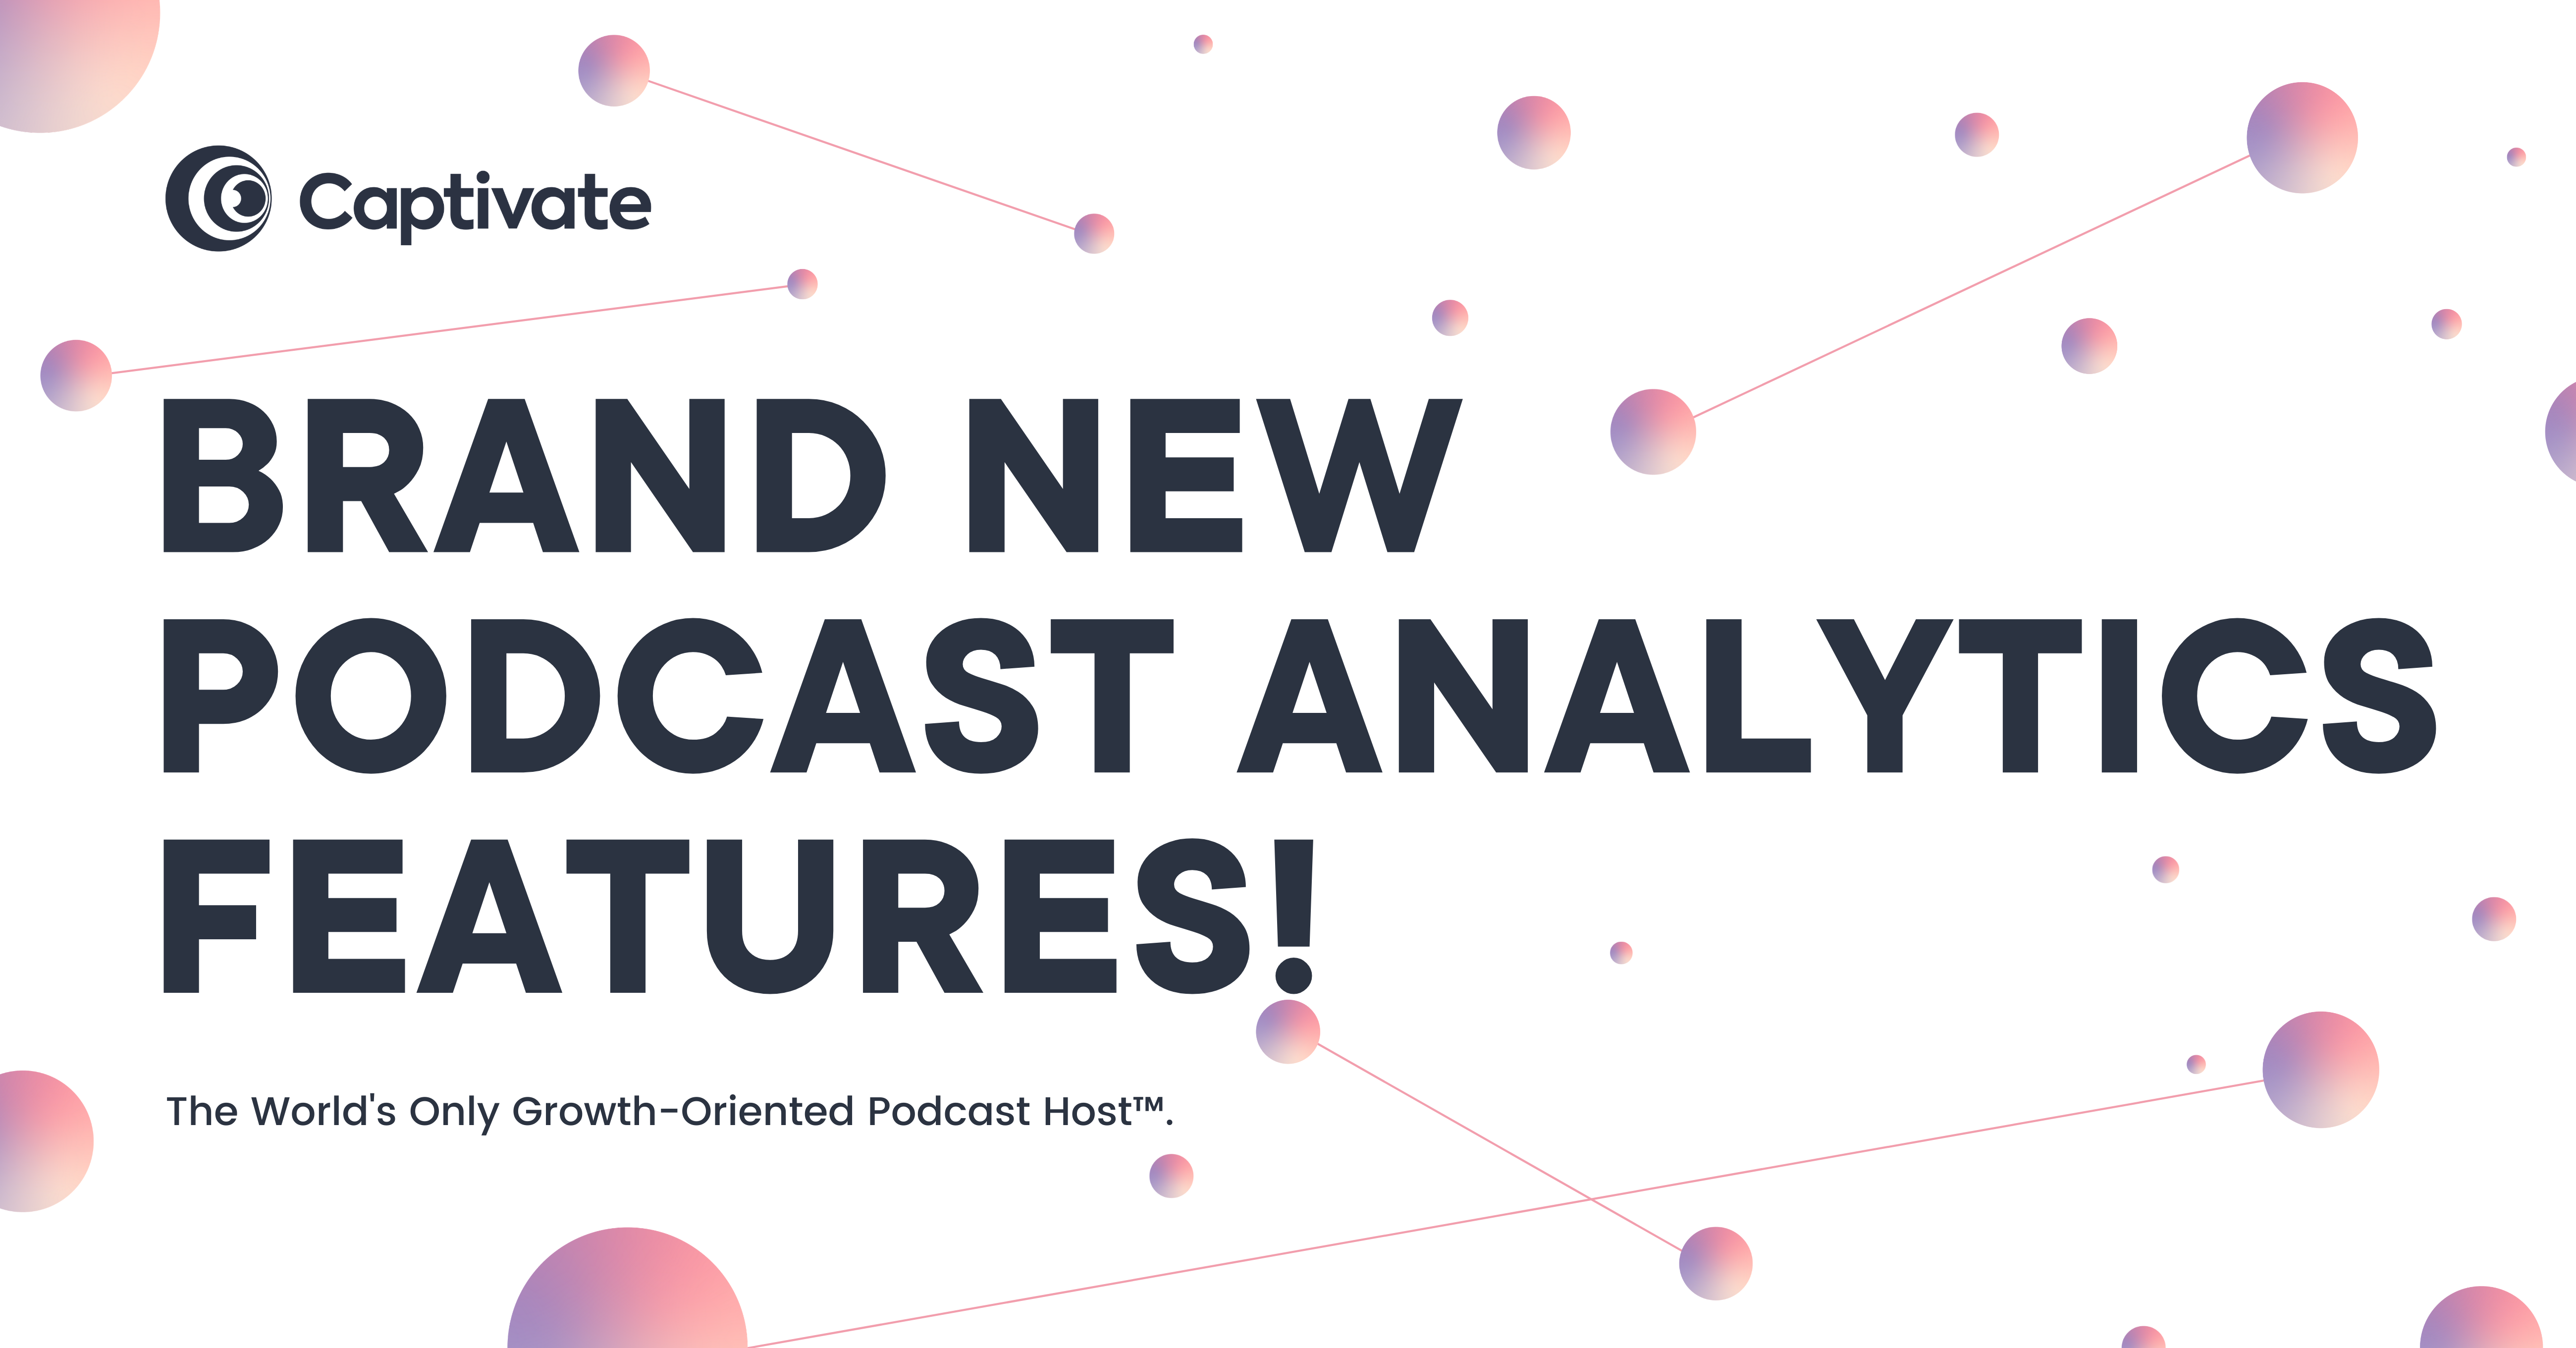 Captivate podcast analytics upgrades 21st April 2020